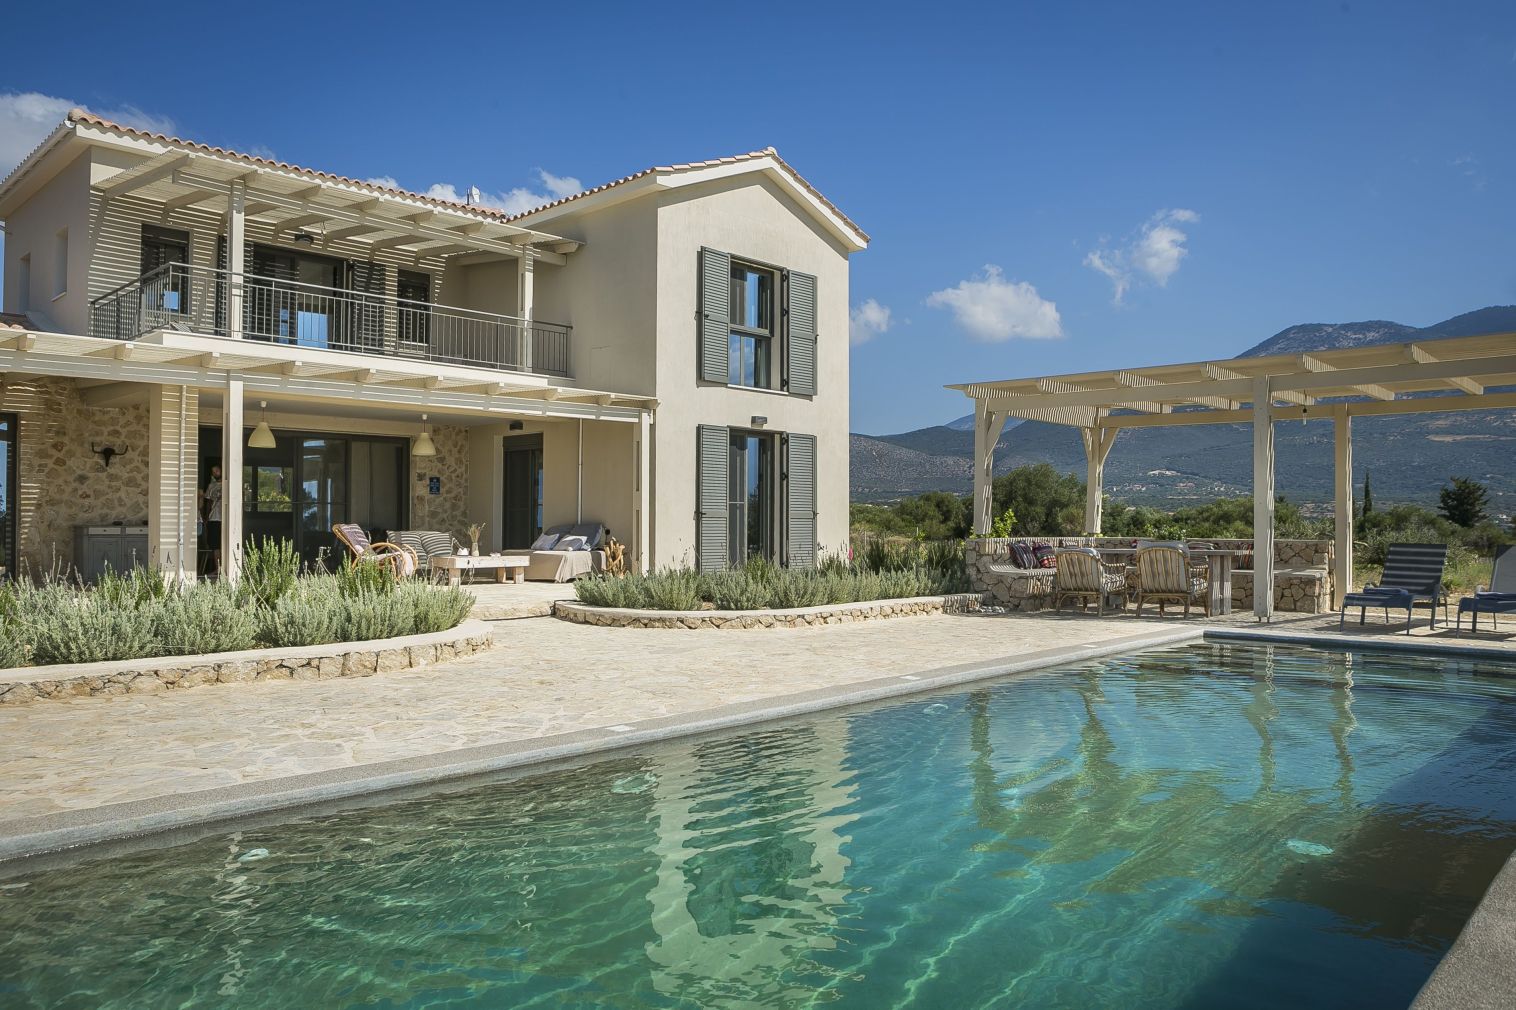 Kefalonia villas: cute 3 bedroom villa with swimming pool, Kefalonia, Greece. Kefalonia hotels.